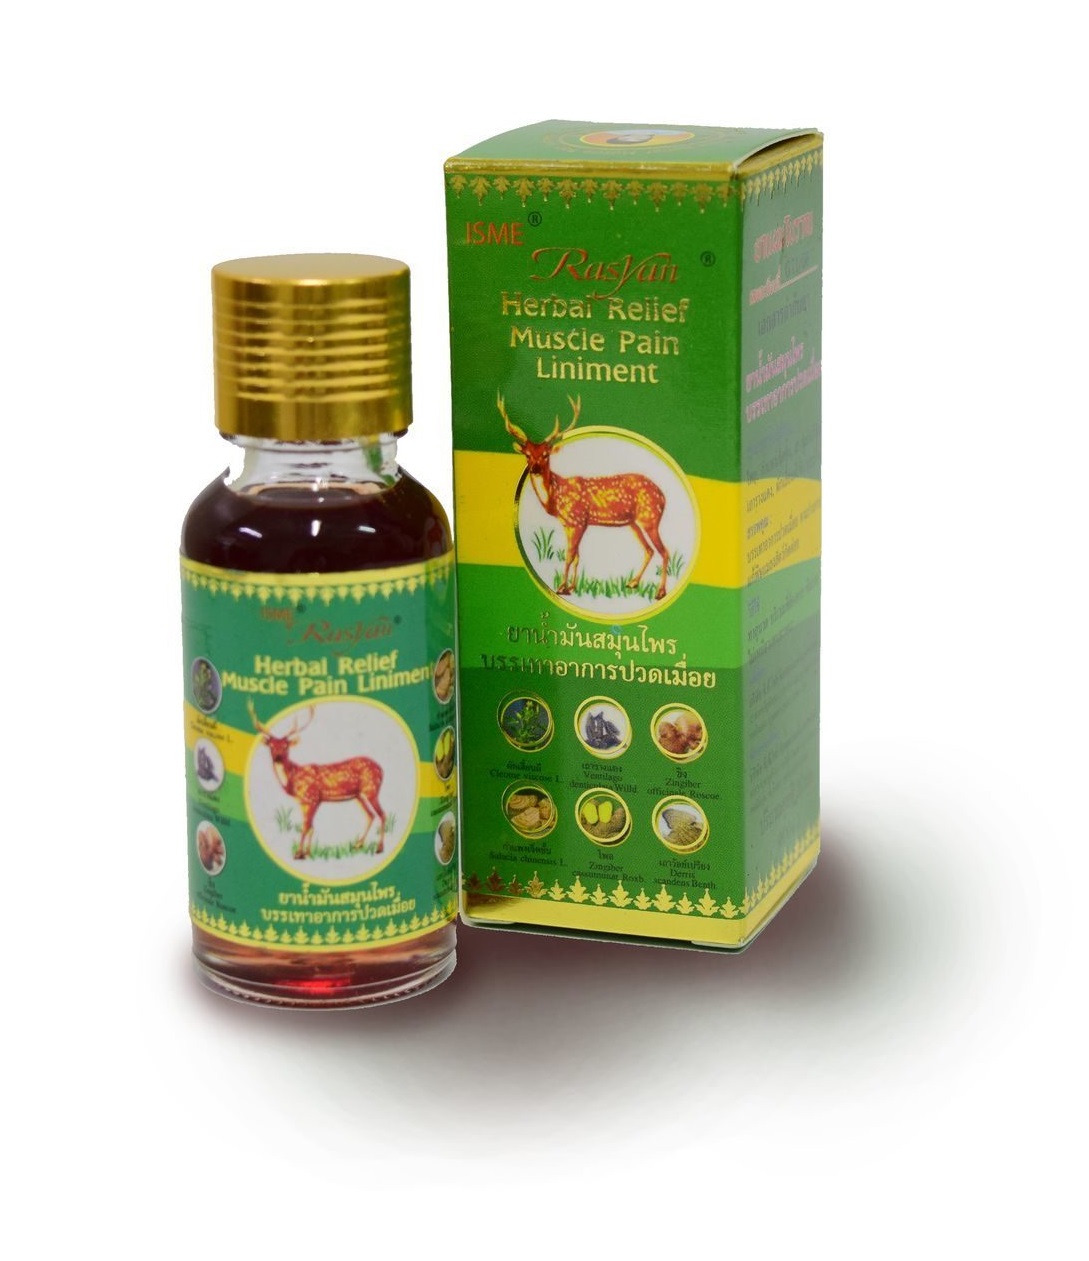 Rasyan Herbal Relief Muscle Pain Liniment, ISME (Масло на травах для облегчения мышечной боли, ИСМЕ), 20 мл.